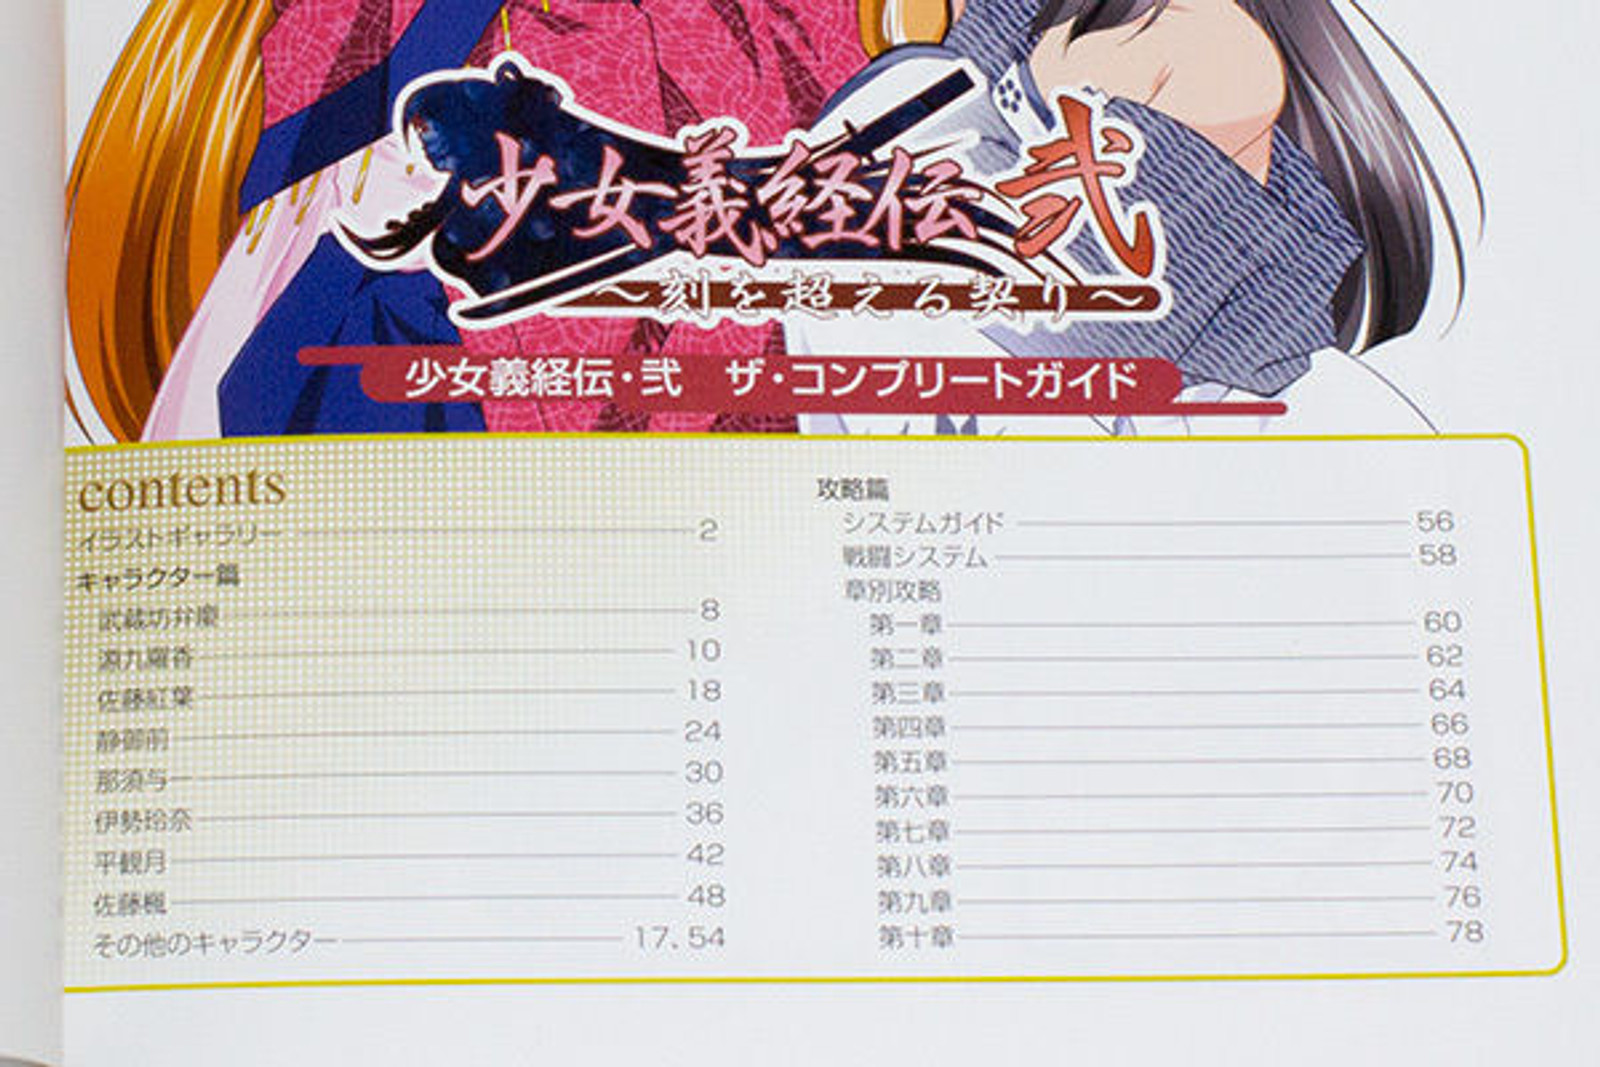 Shojo Yoshitsuneden Complete Guide Illustration Art Book JAPAN ANIME PS2 GAME